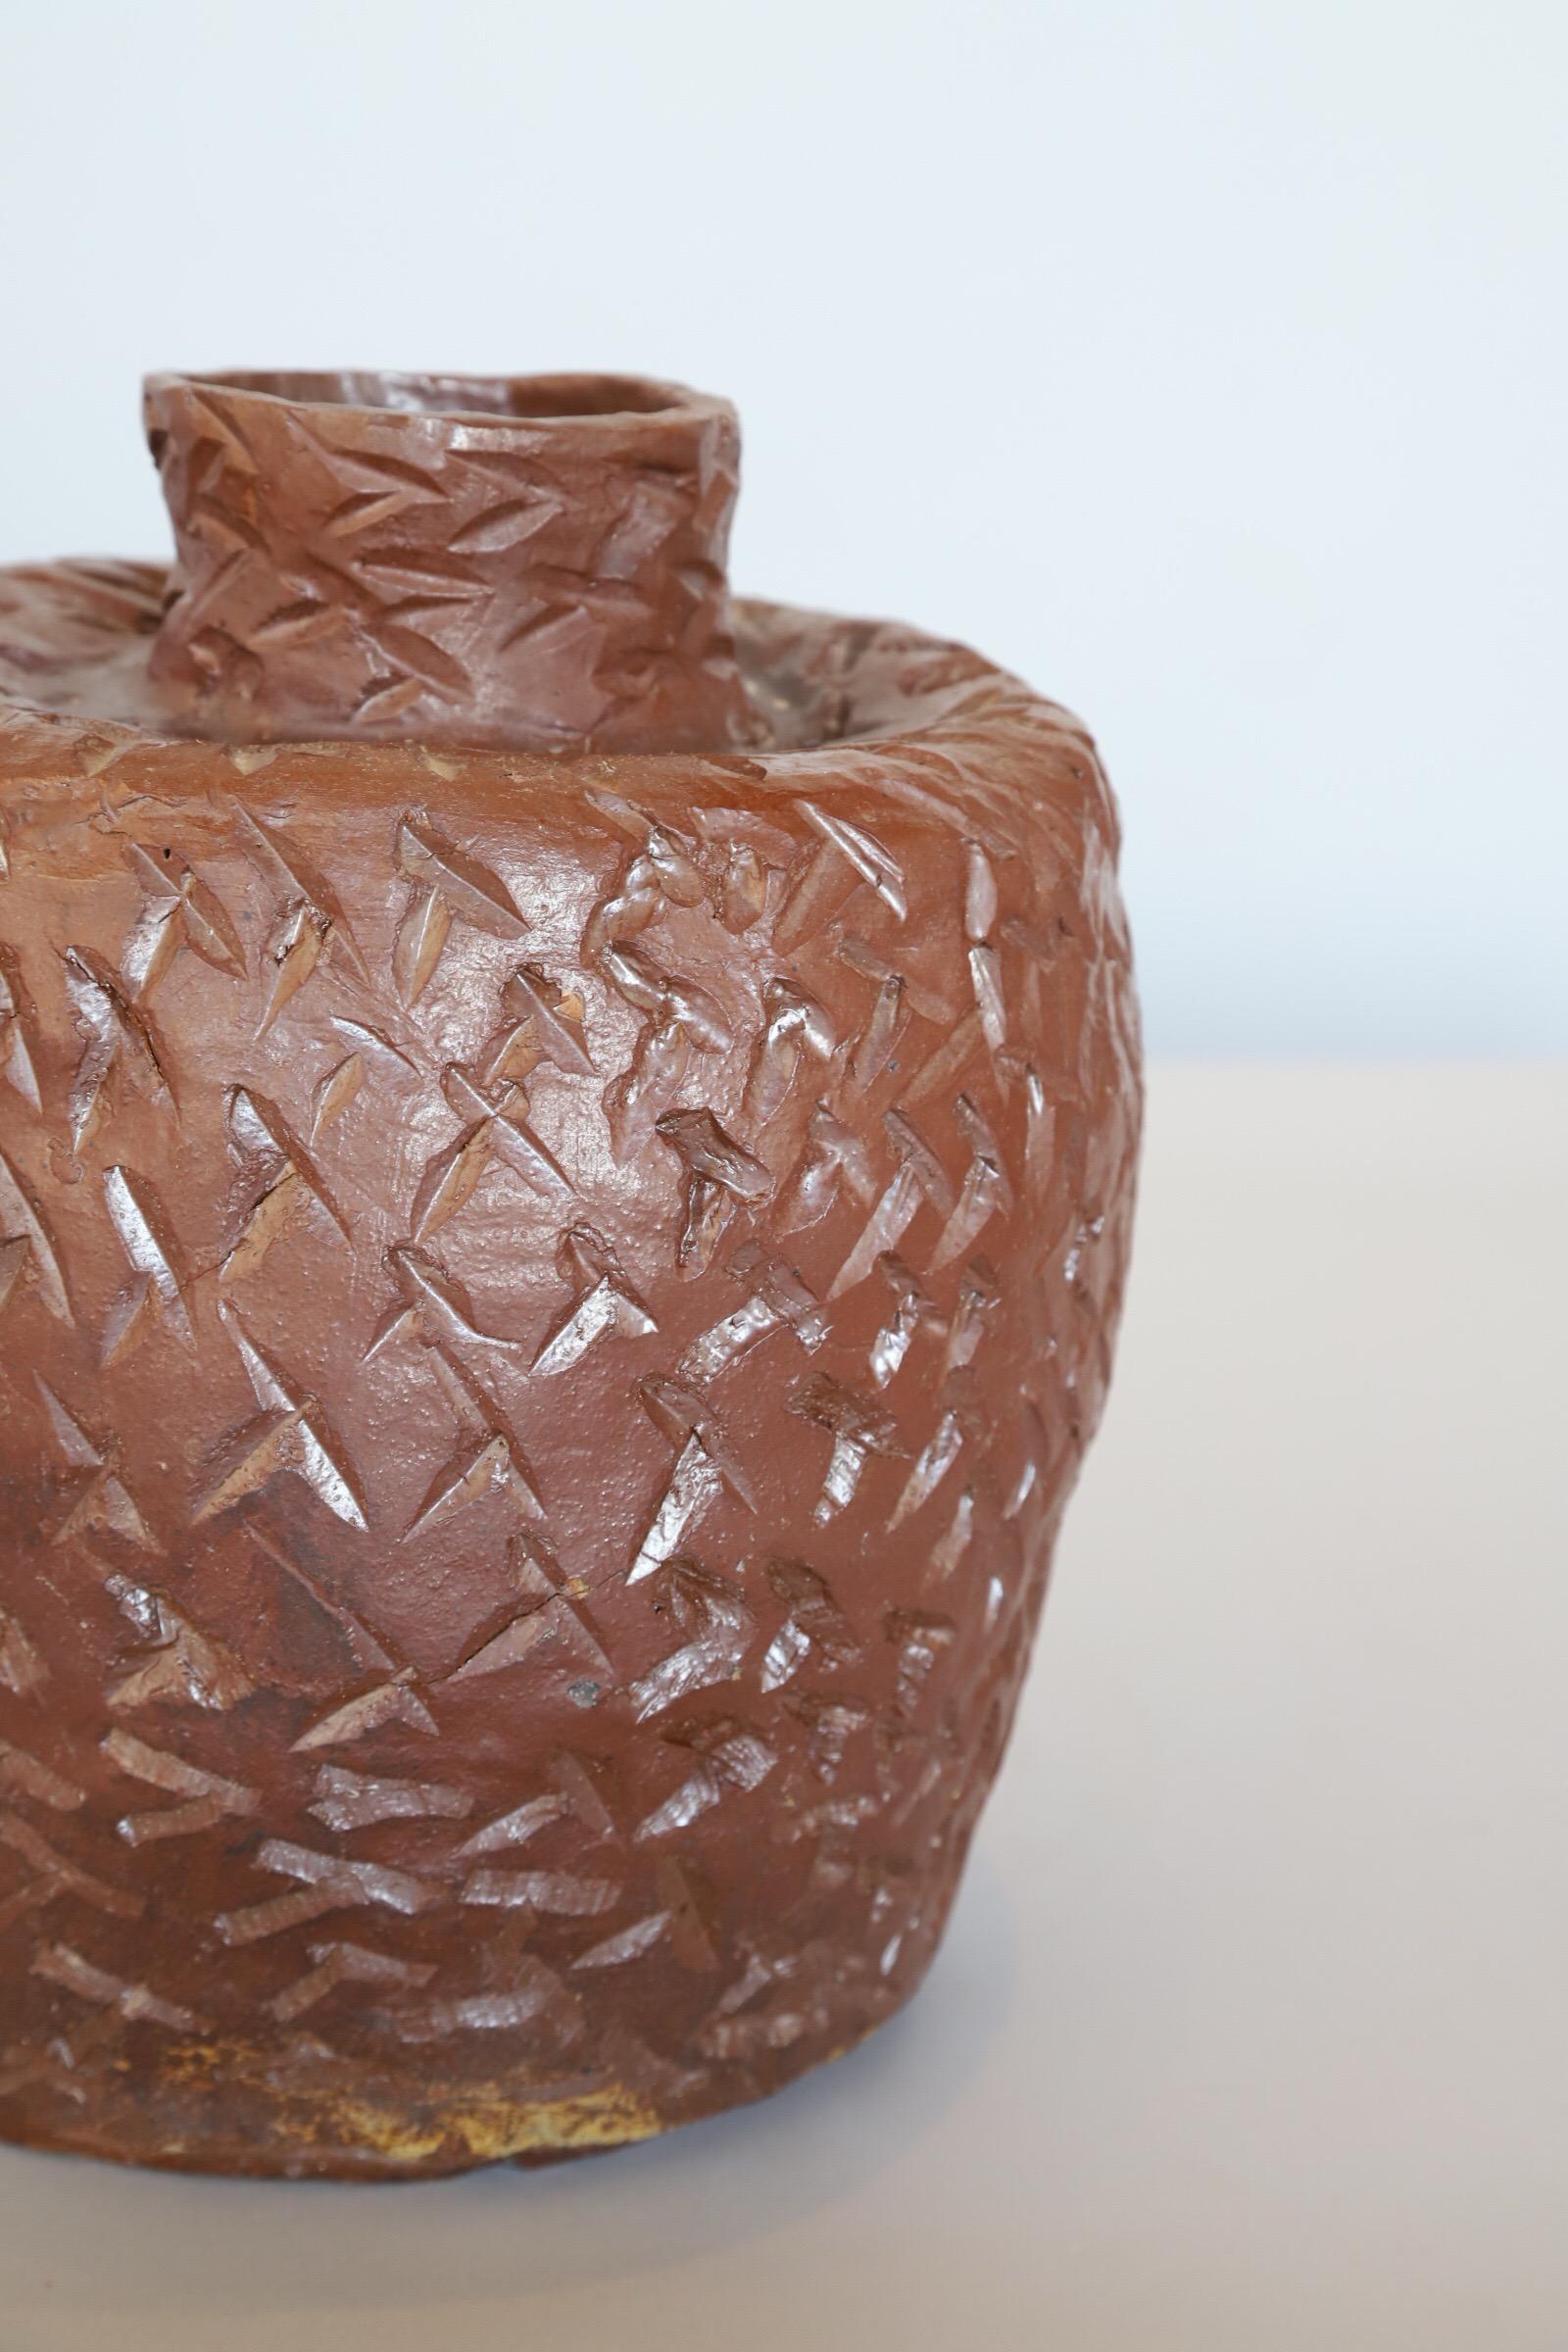 Elegance in imperfection. Fun handmade textured ceramic pot.